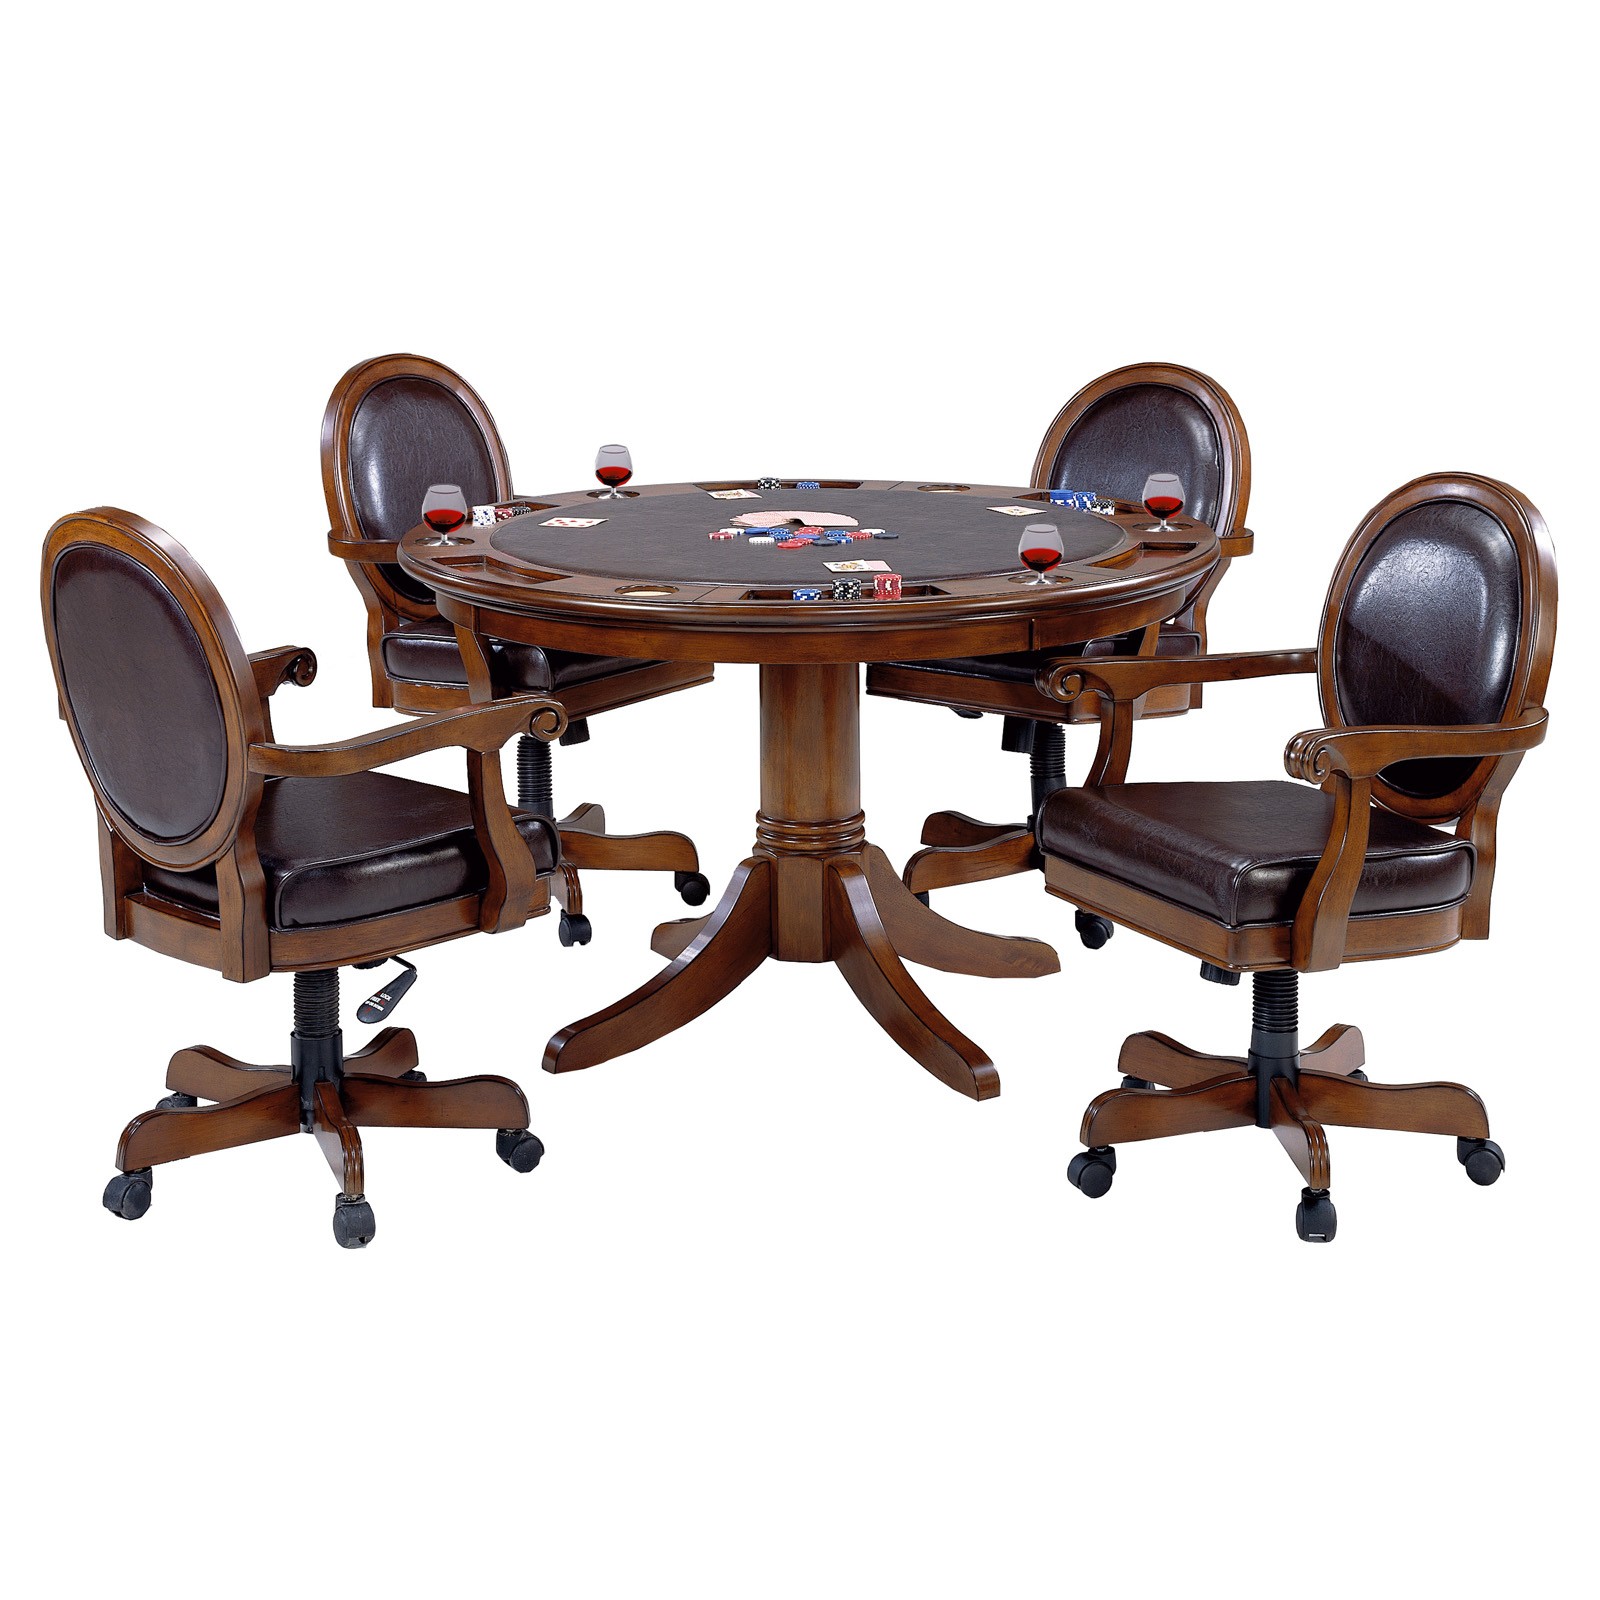 Hillsdale warrington 5 piece game table set poker tables